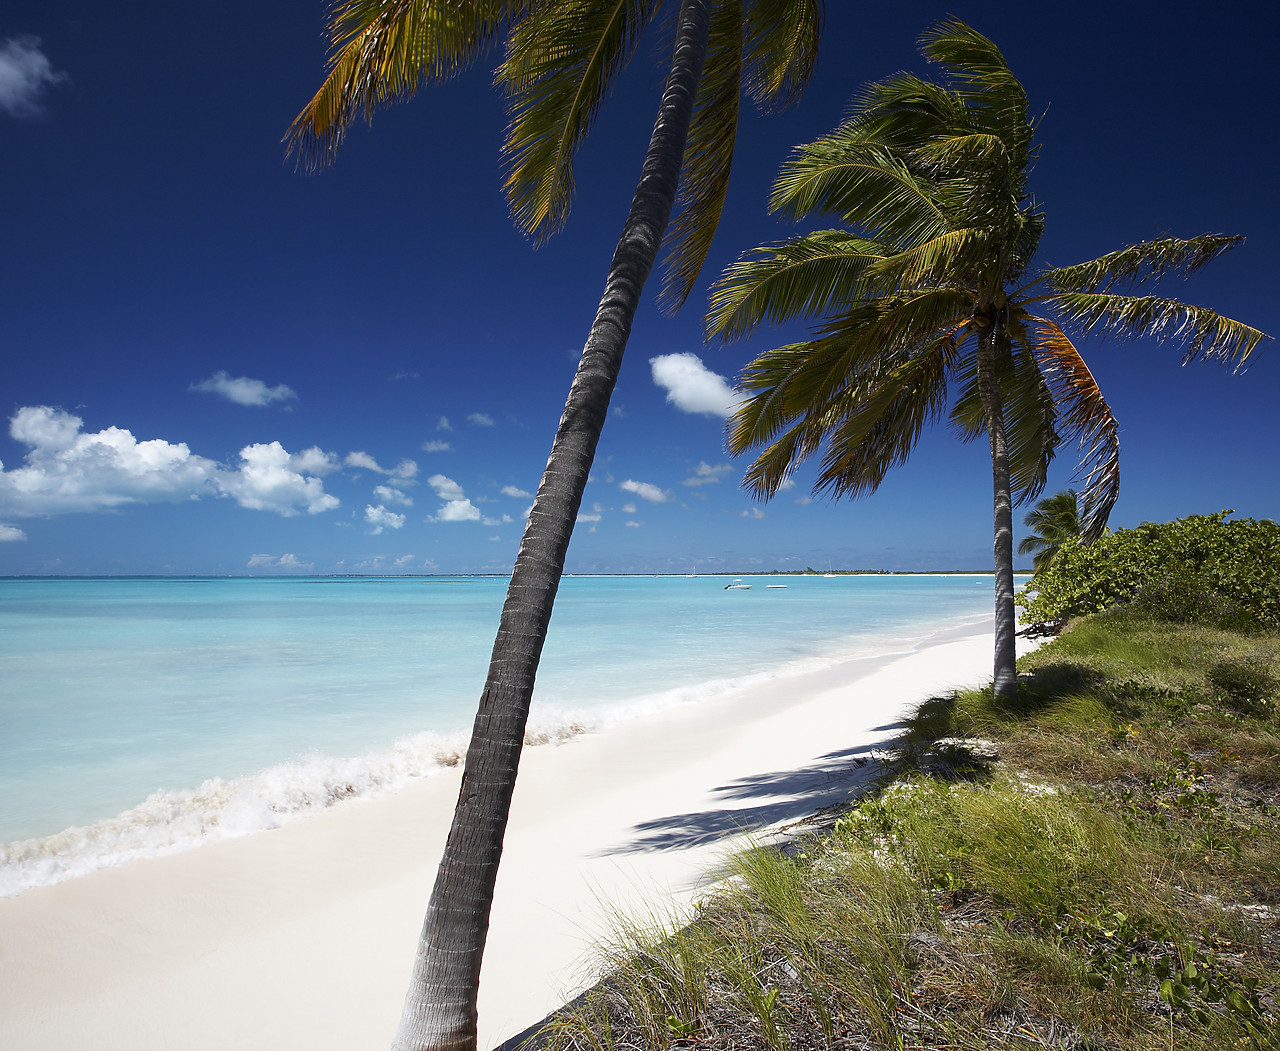 #070025-1 - Coco Point, Barbuda, Caribbean, West Indies